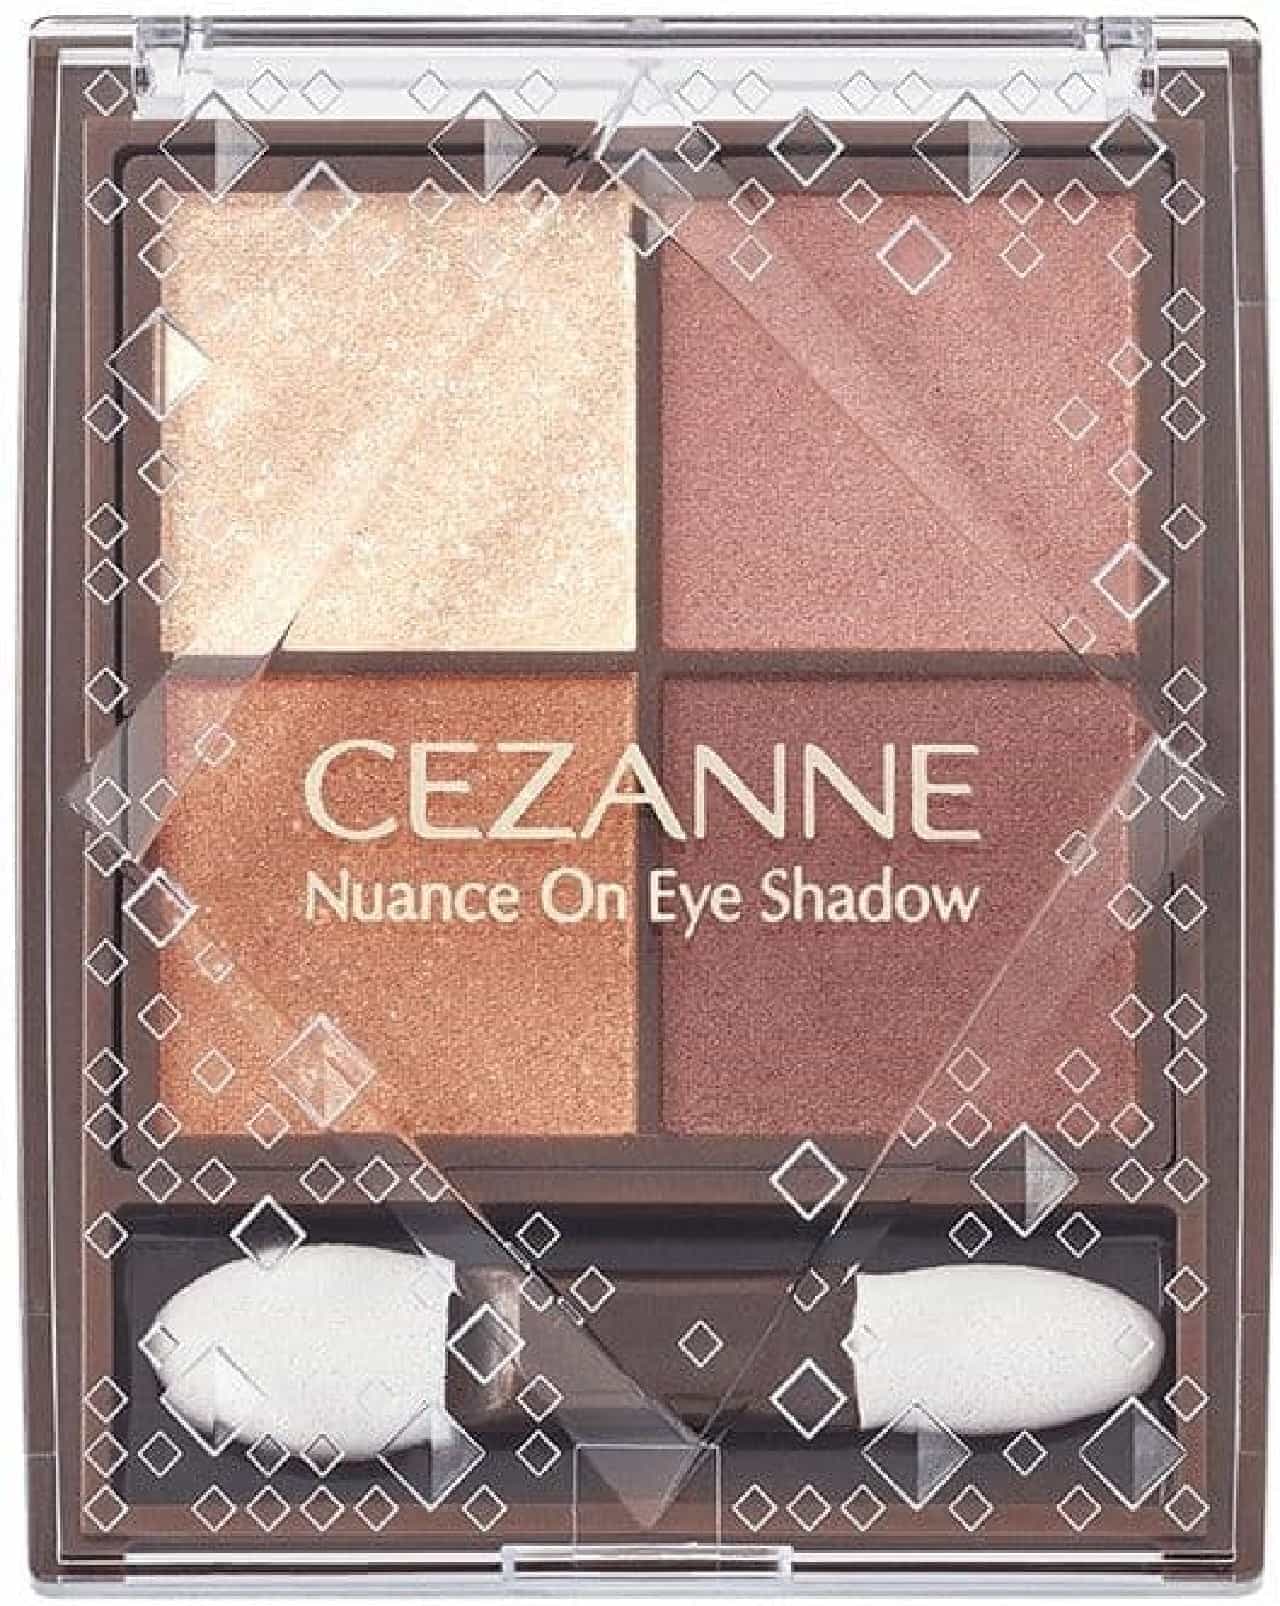 Cezanne nuance on eyeshadow